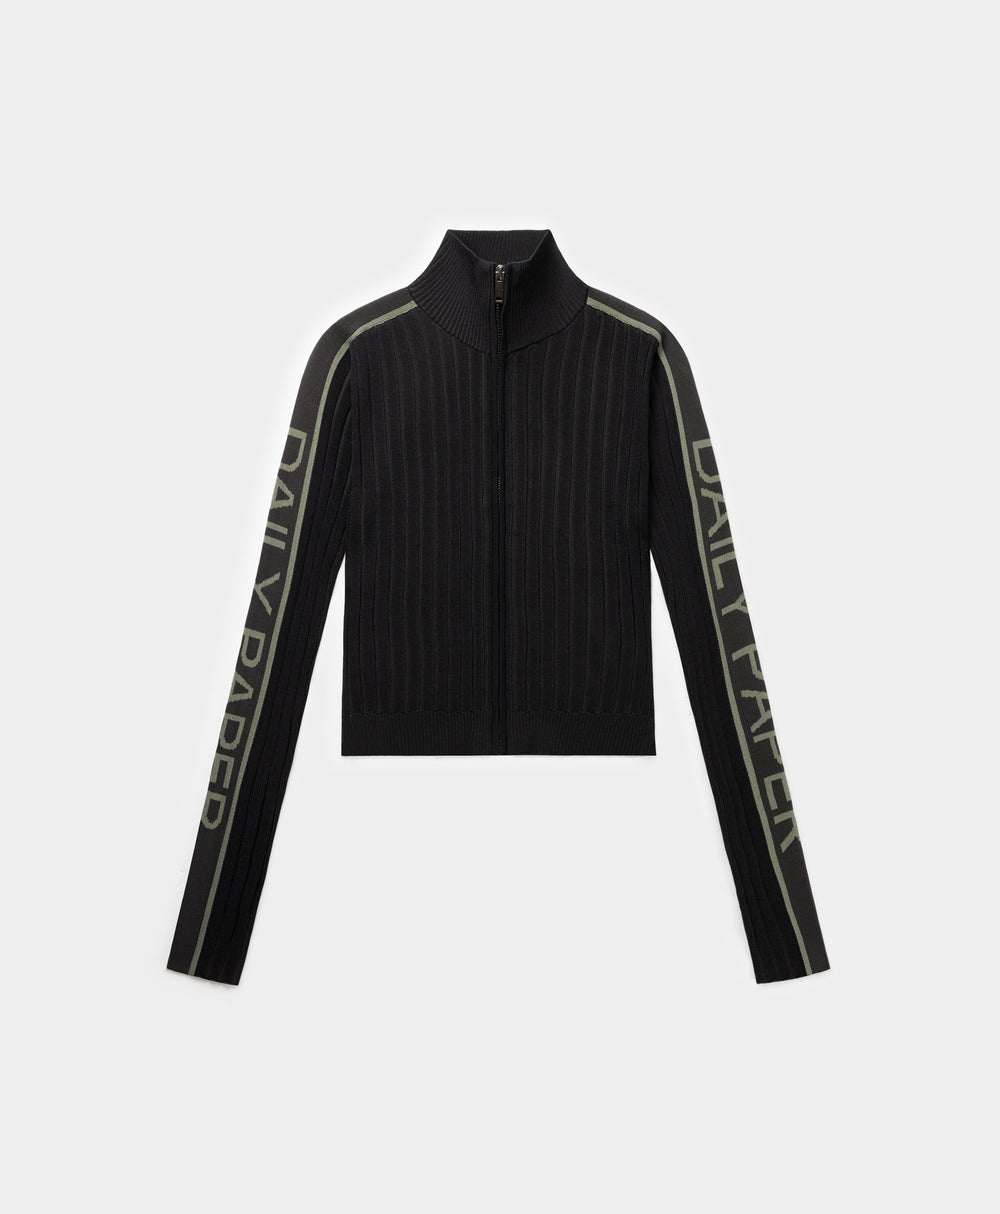 DP - Black Manoa Knit Sweater Cardigan - Packshot - Front